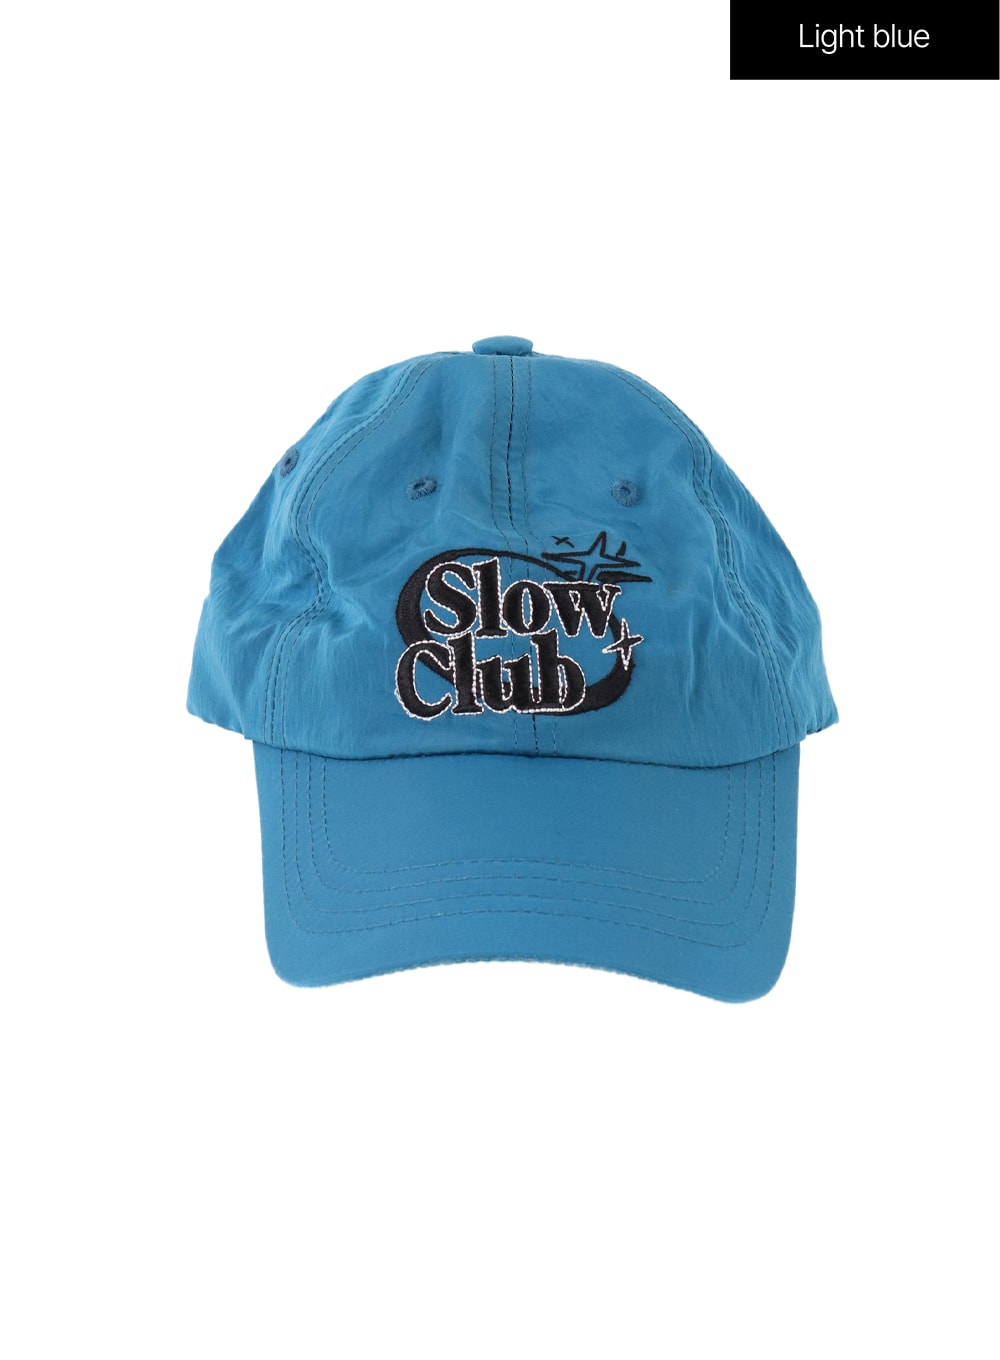 slow-club-baseball-cap-if413 / Light blue